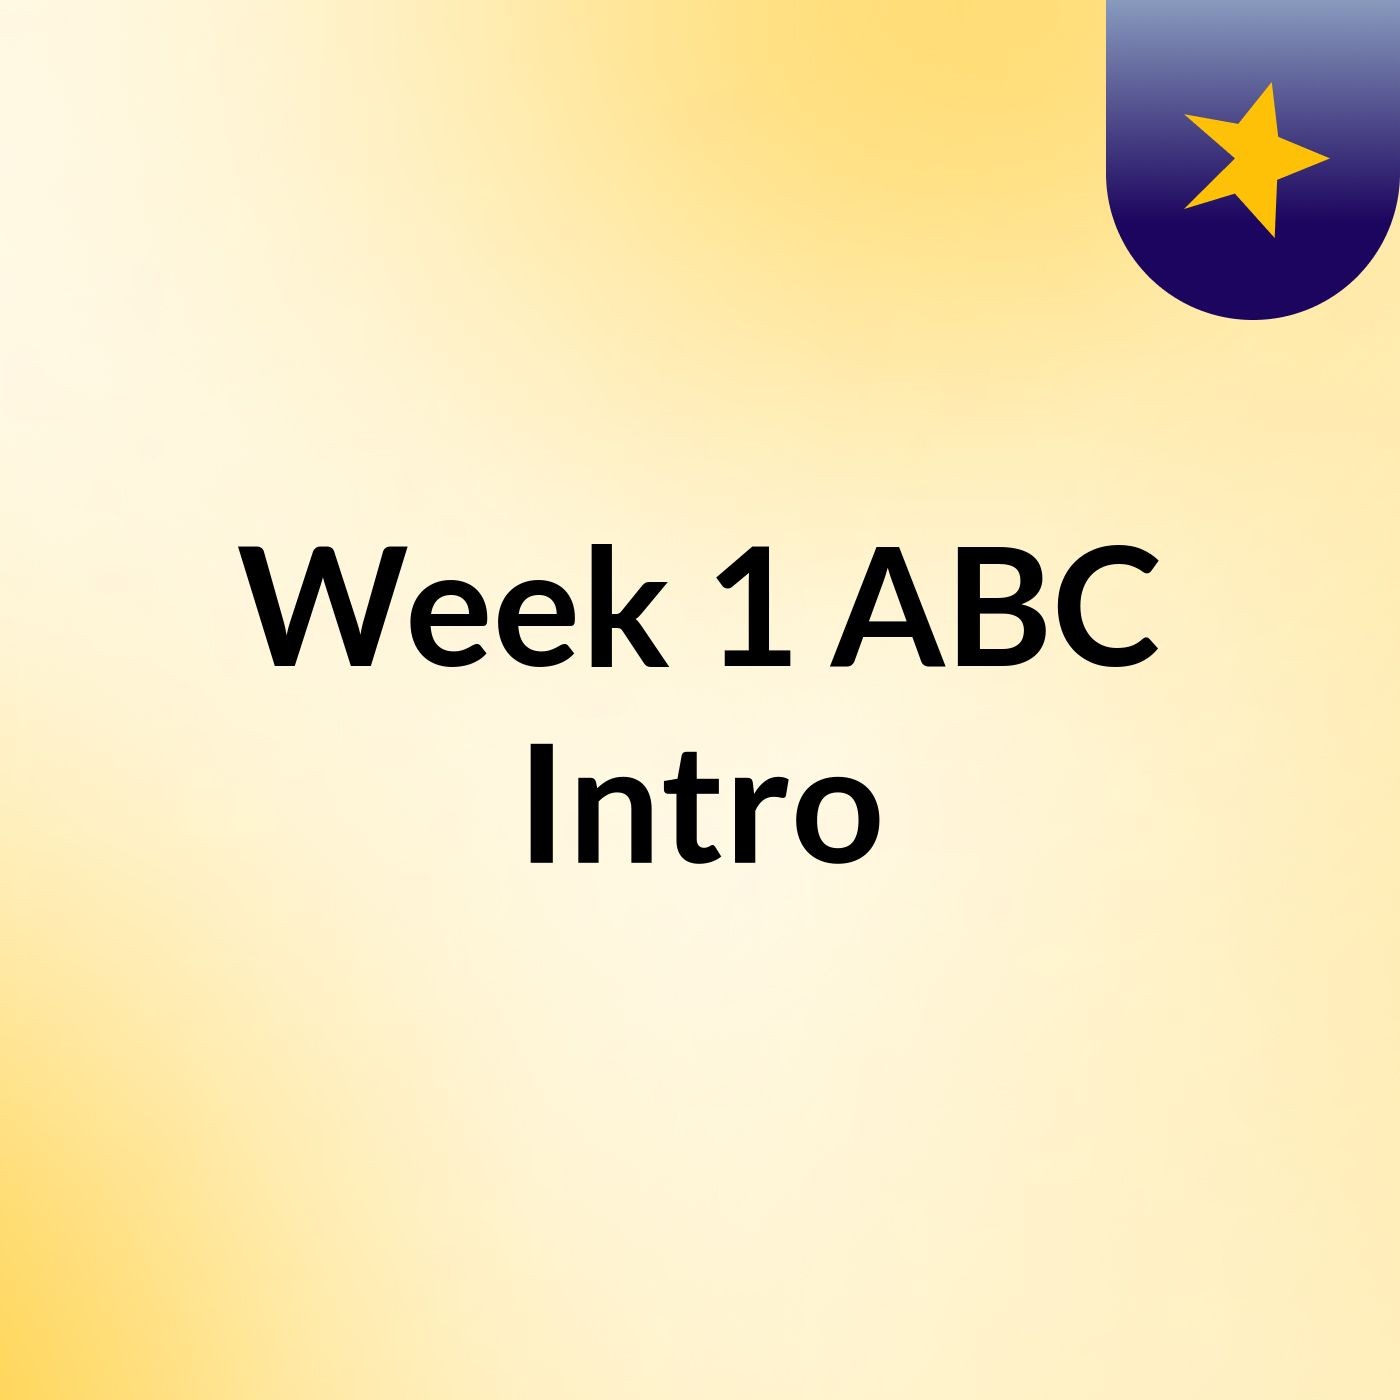 Week 1 ABC Intro